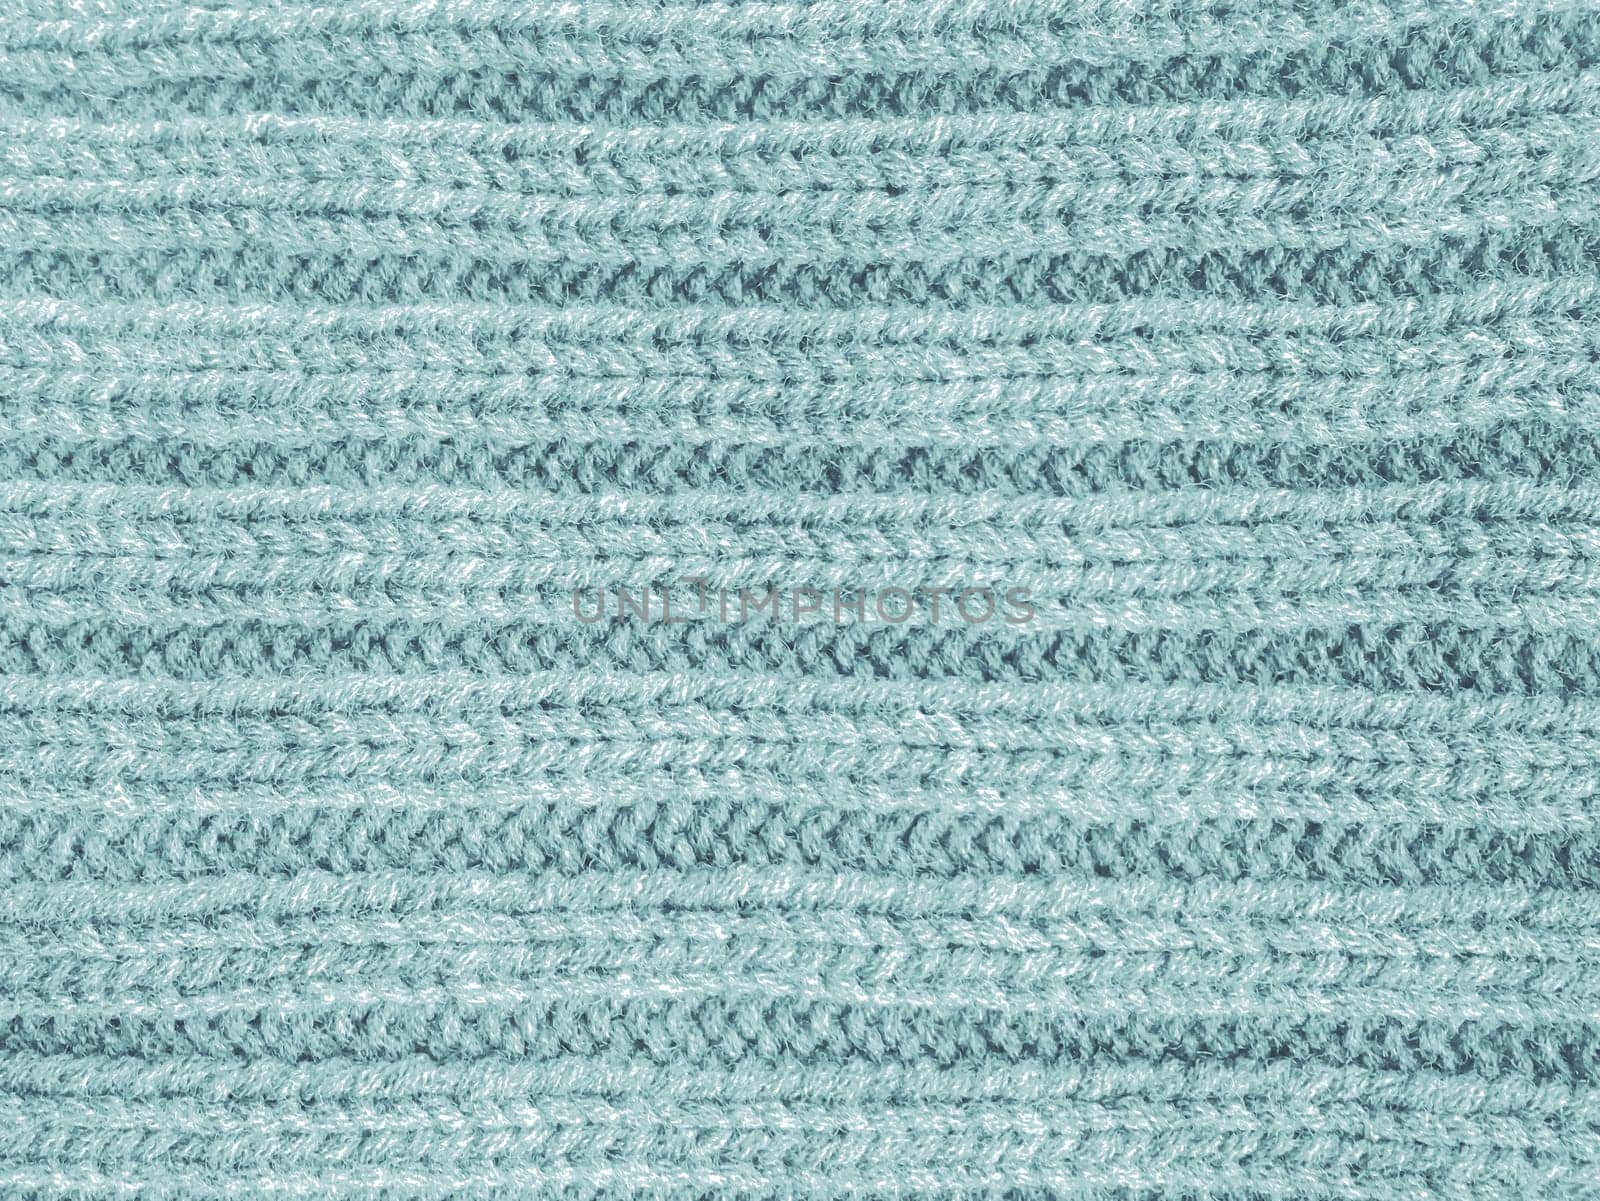 Jacquard Knitting. Xmas Wool Ornament. Handmade Linen Background. Texture Knitted Fabric. Scandinavian Fiber Wallpaper. Abstract Soft Thread. Vintage Knitwear Canvas. Woven Fabrics.